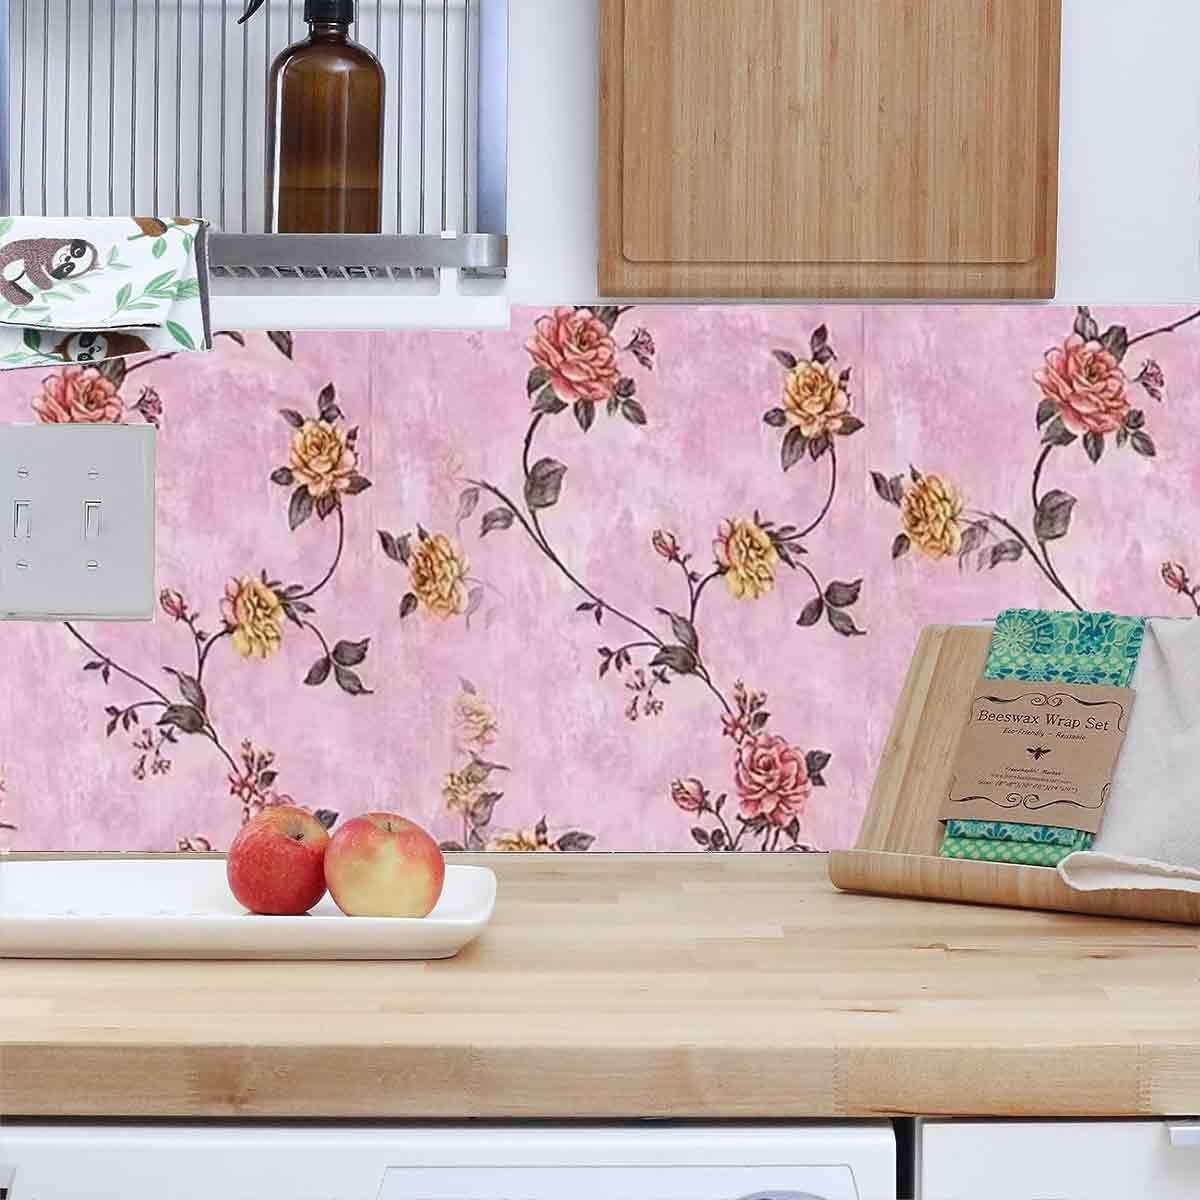 Haus Fototapete Series Pattern Tapete,selbstklebende Floral Jormftte Rosa Tapete,für Deko